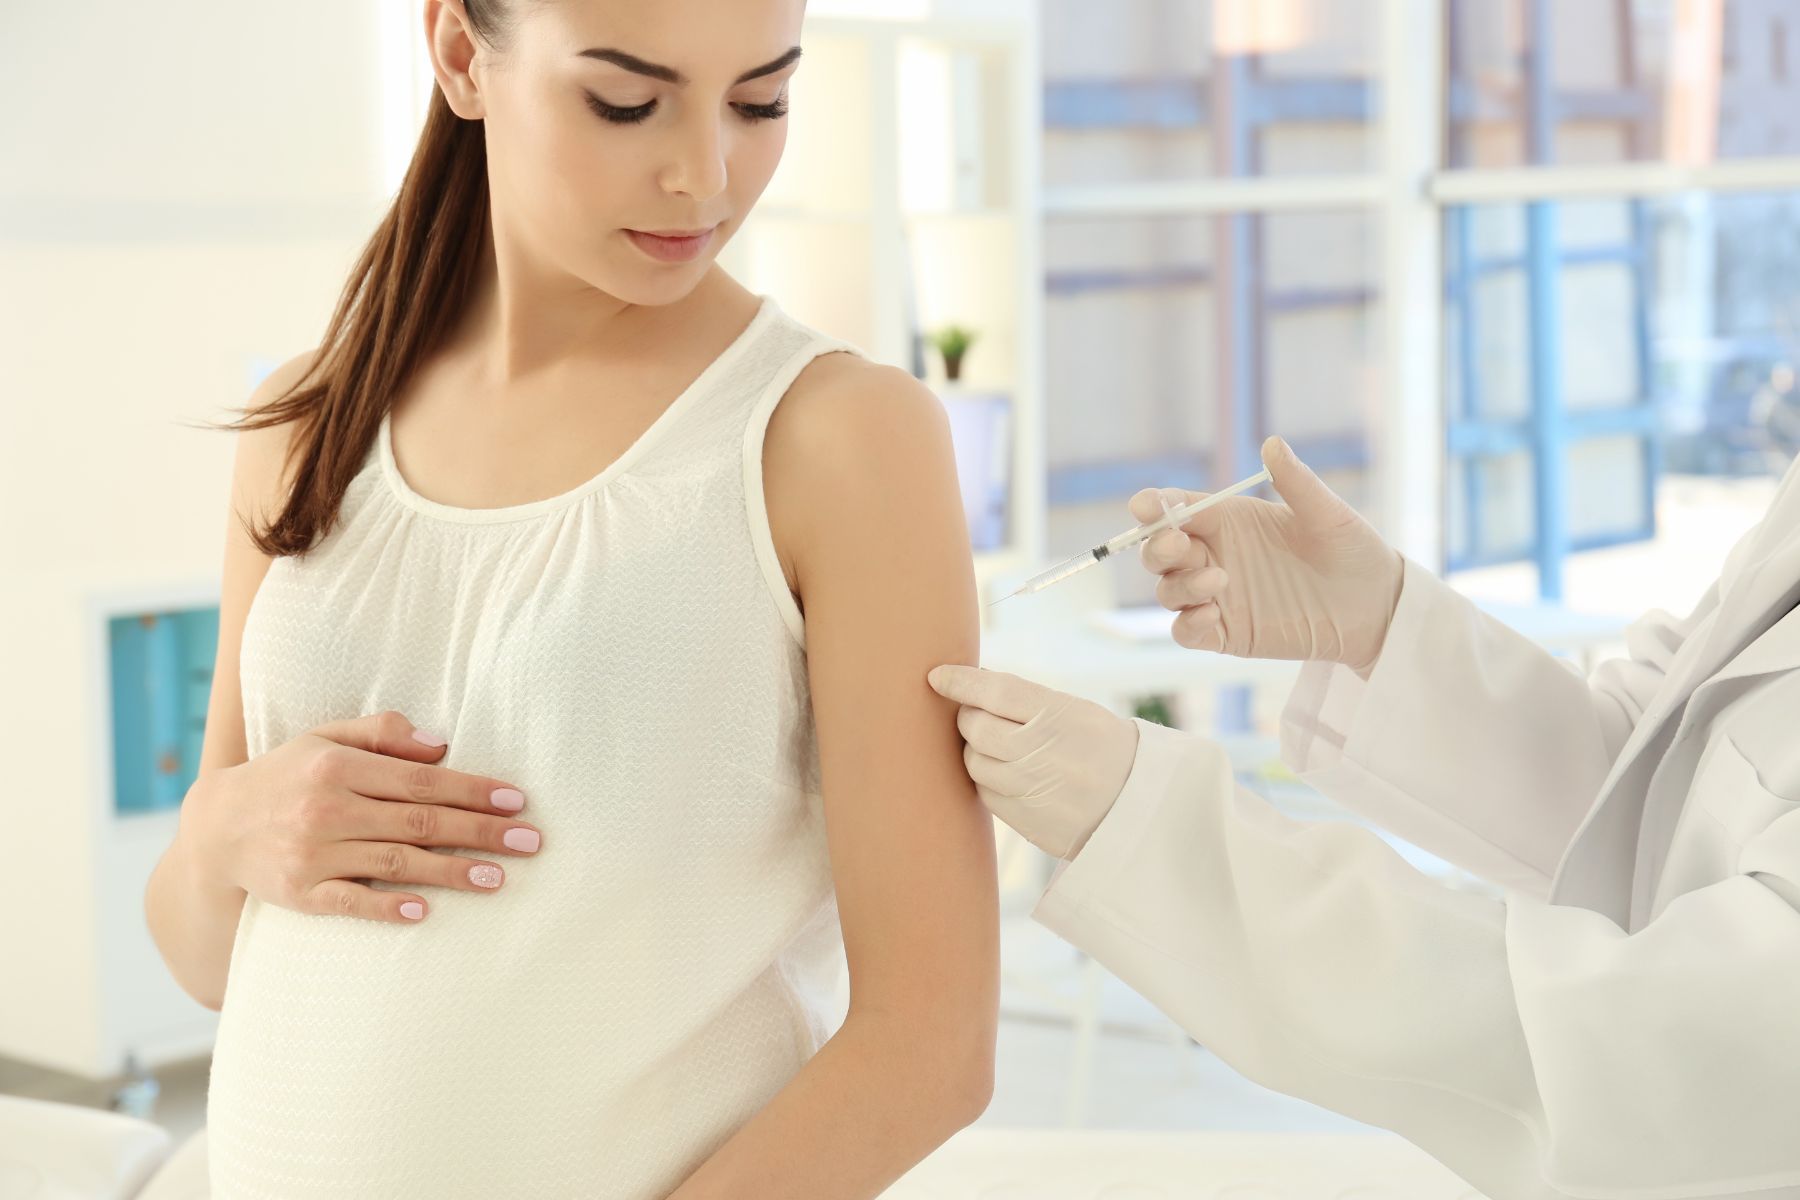 https://lirp.cdn-website.com/627fdb9e/dms3rep/multi/opt/pregnant+woman+receiving+vaccine-1920w.jpg